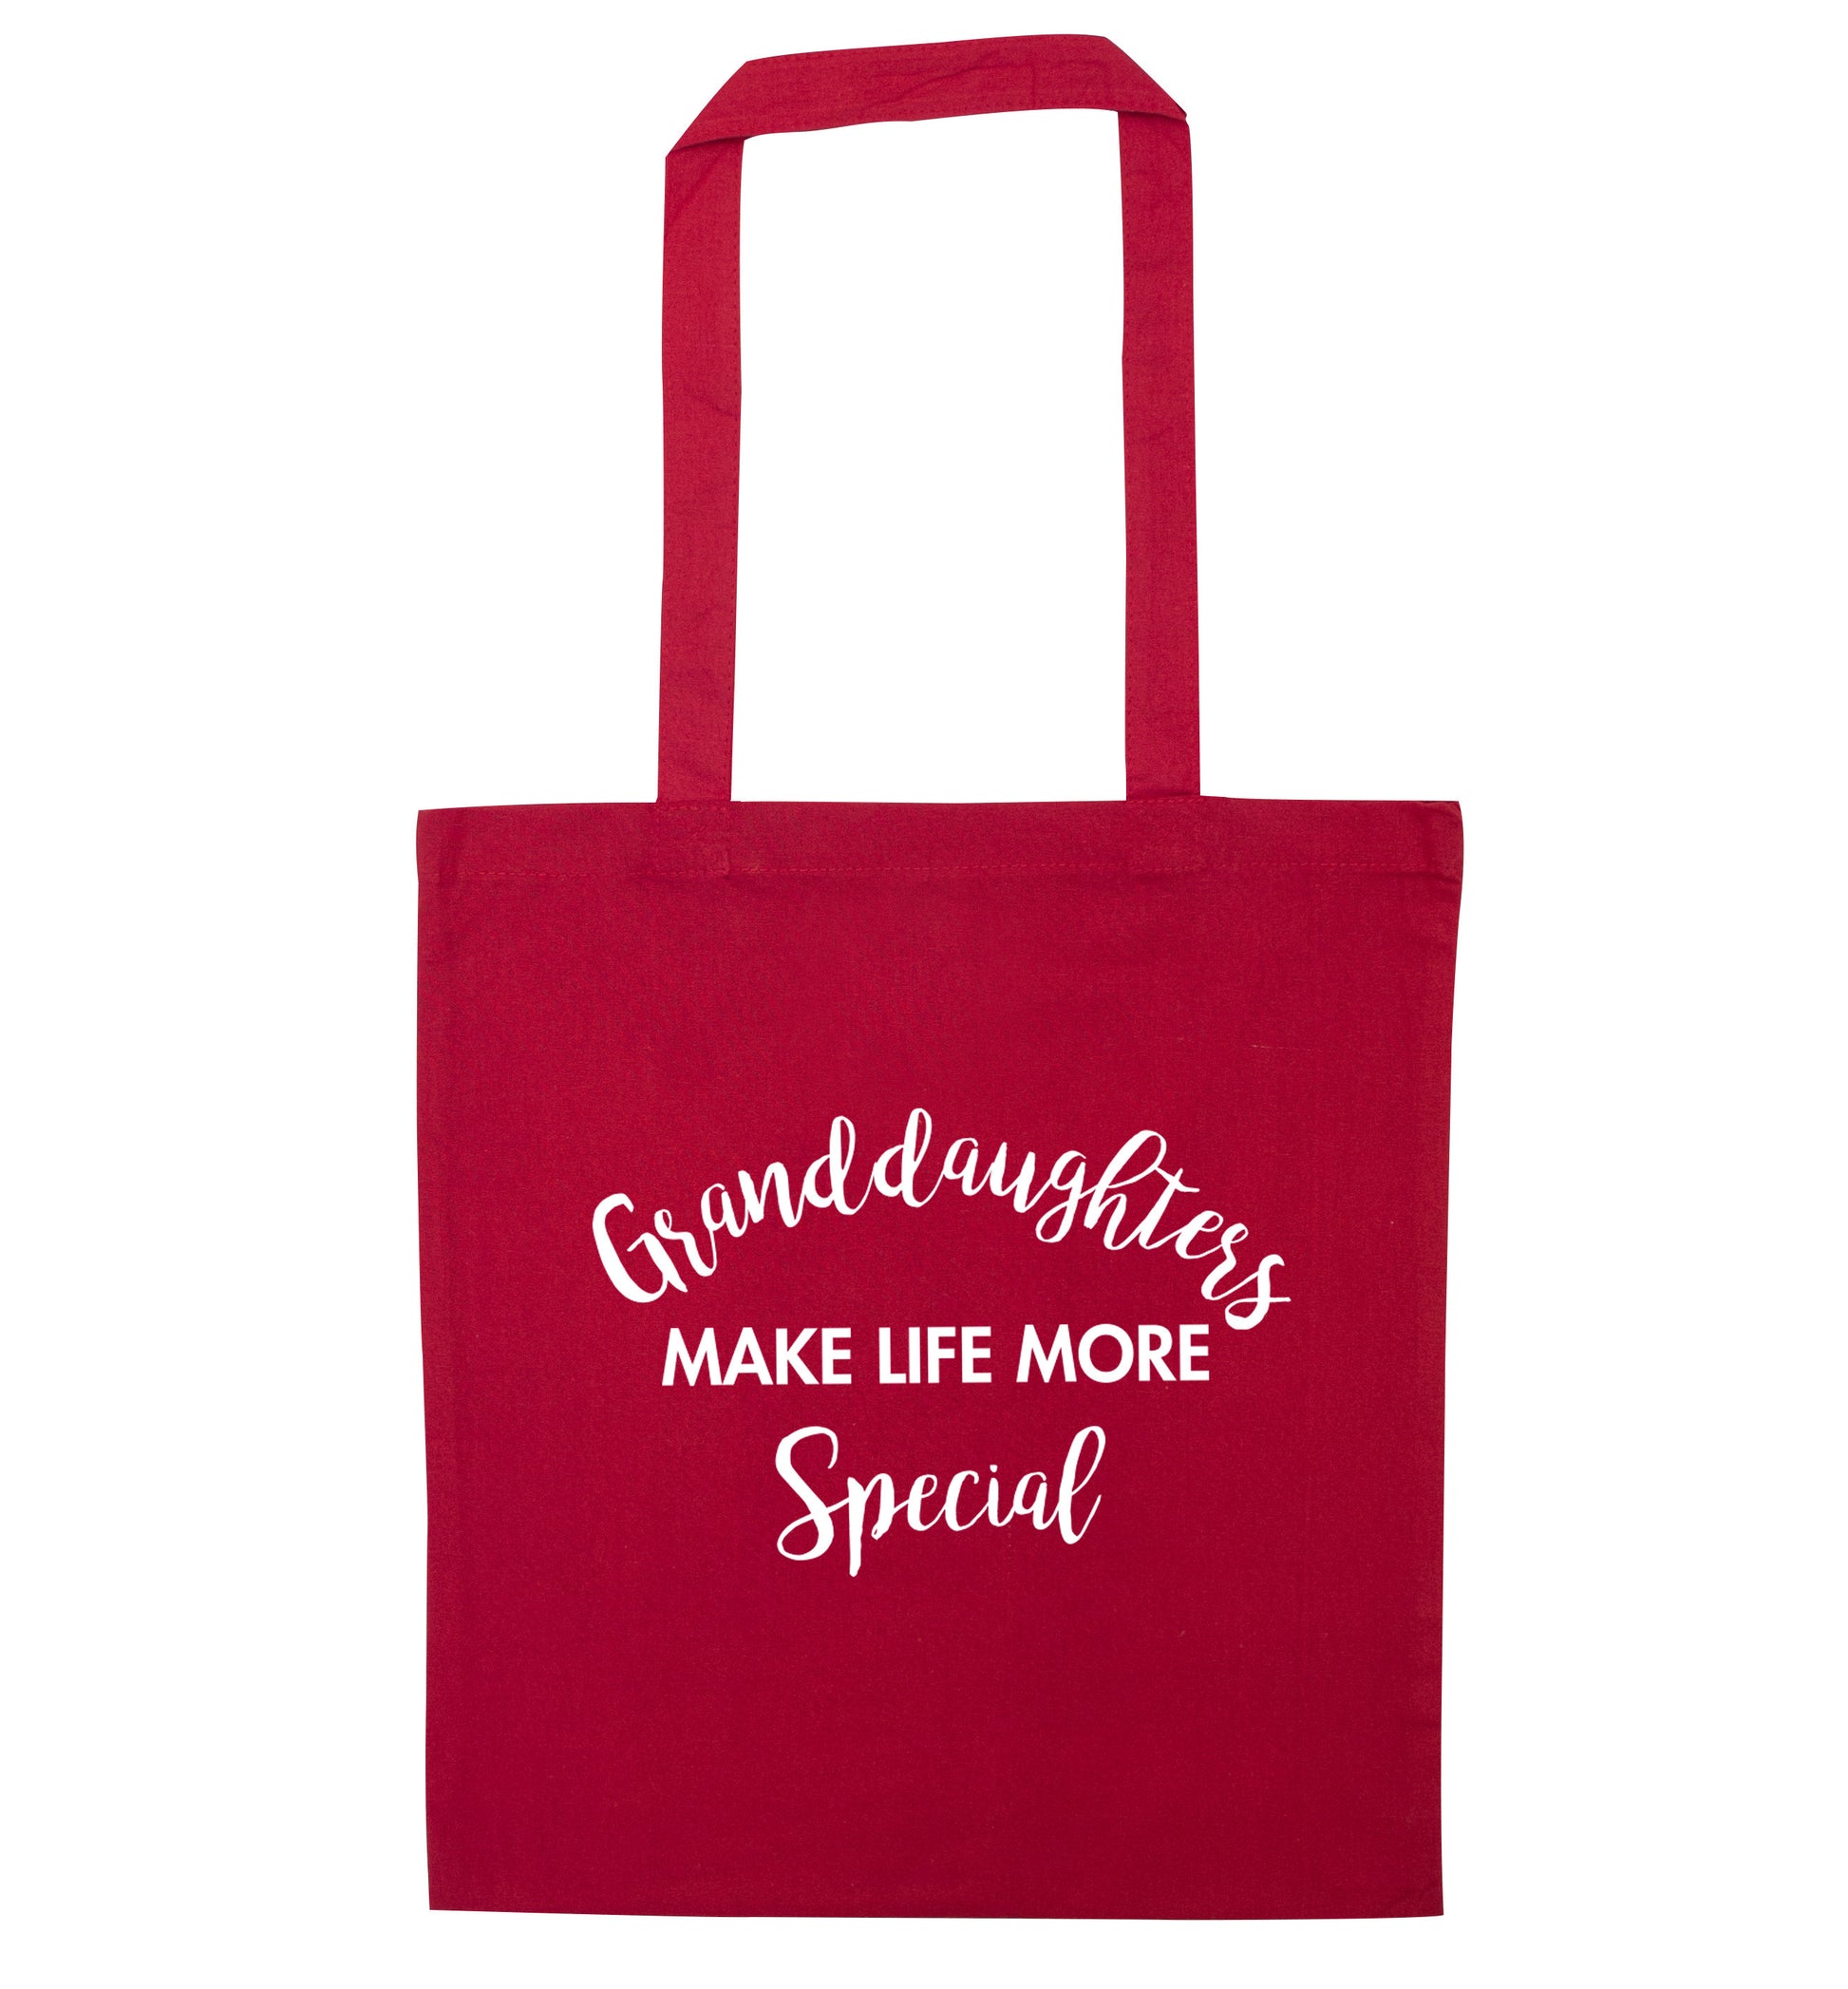 Granddaughters make life more special red tote bag